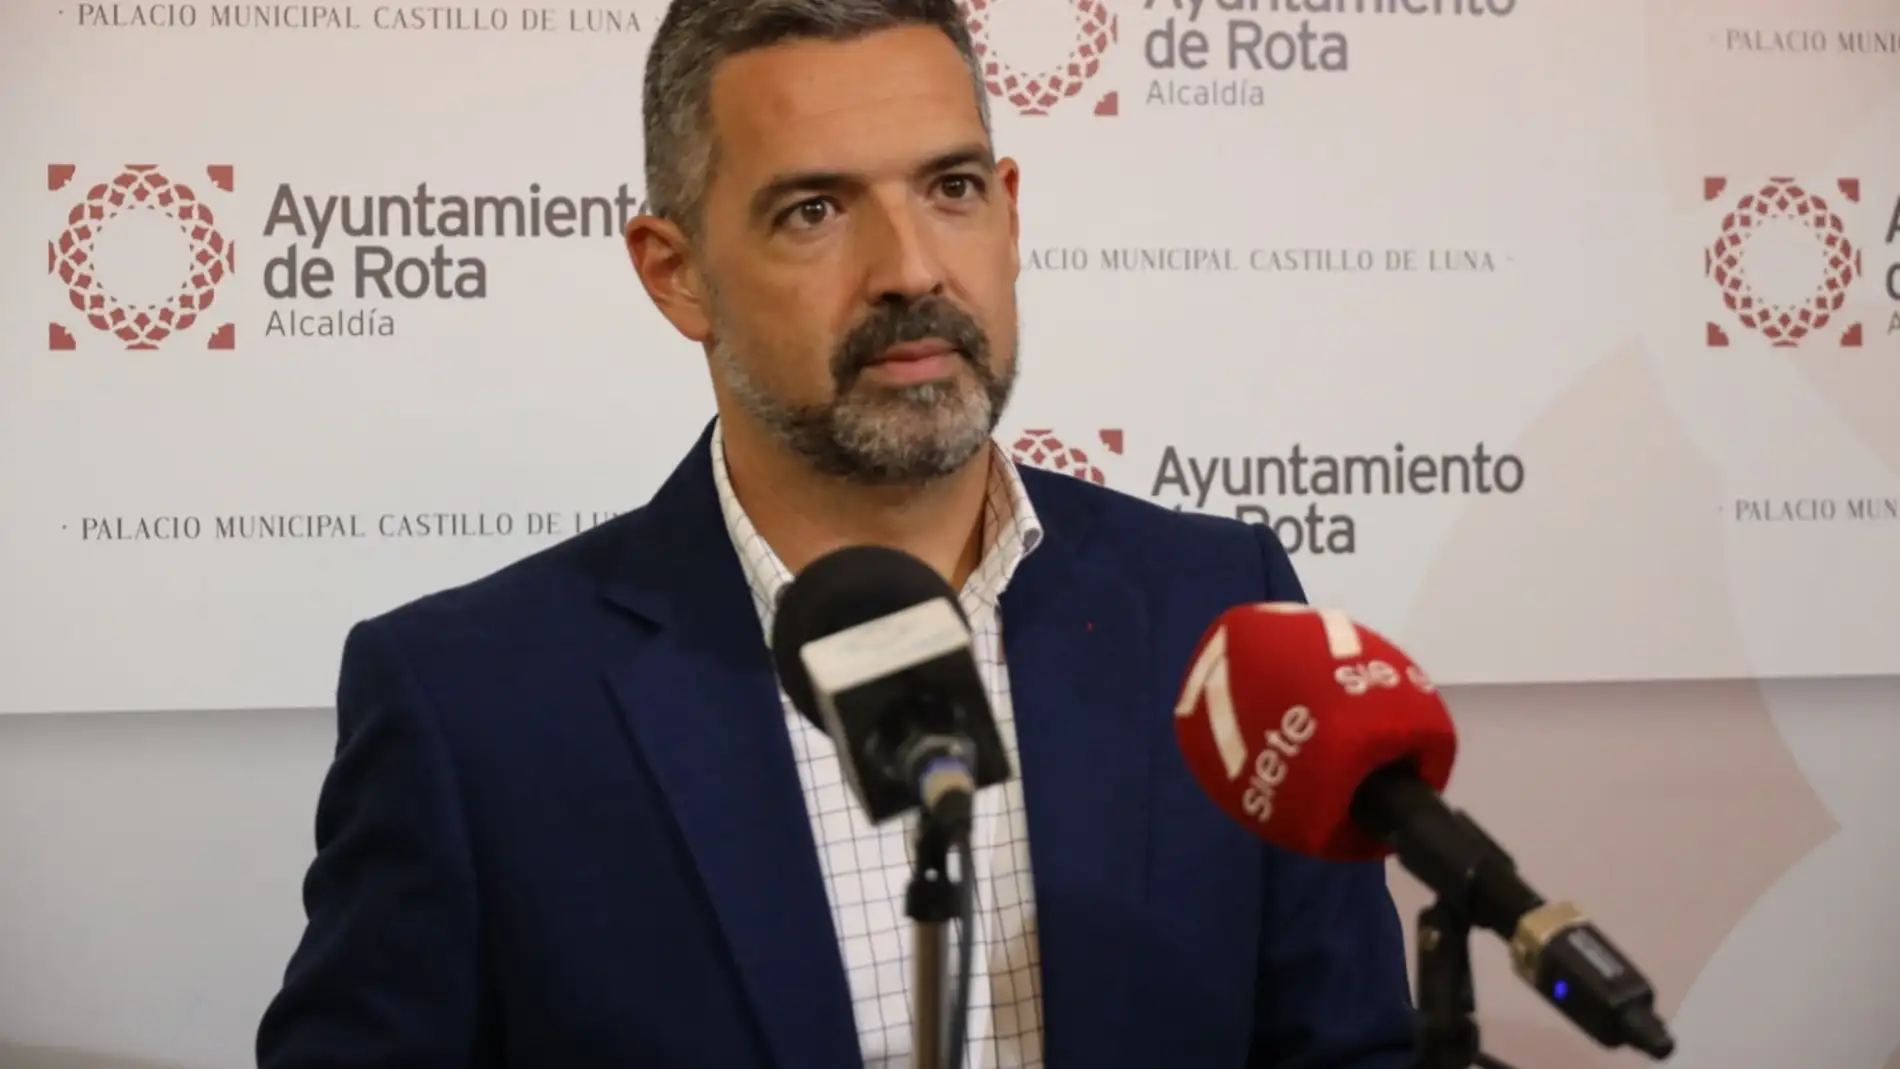 El alcalde de Rota, Javier Ruiz Arana, en rueda de prensa